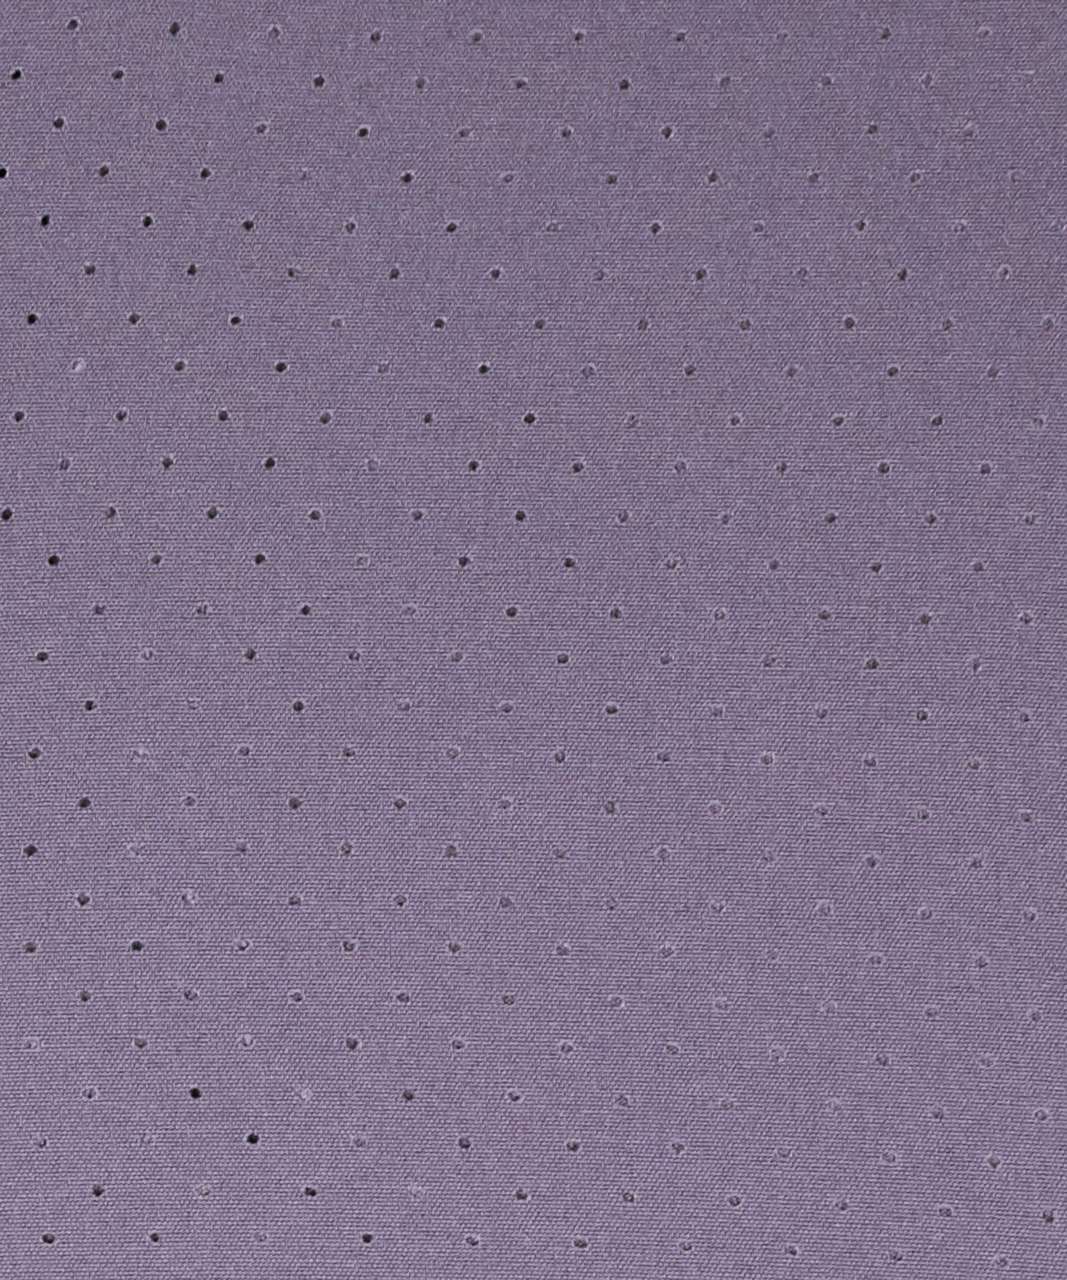 Lululemon Pace Breaker Short *Lined Perforated 9" - Graphite Purple